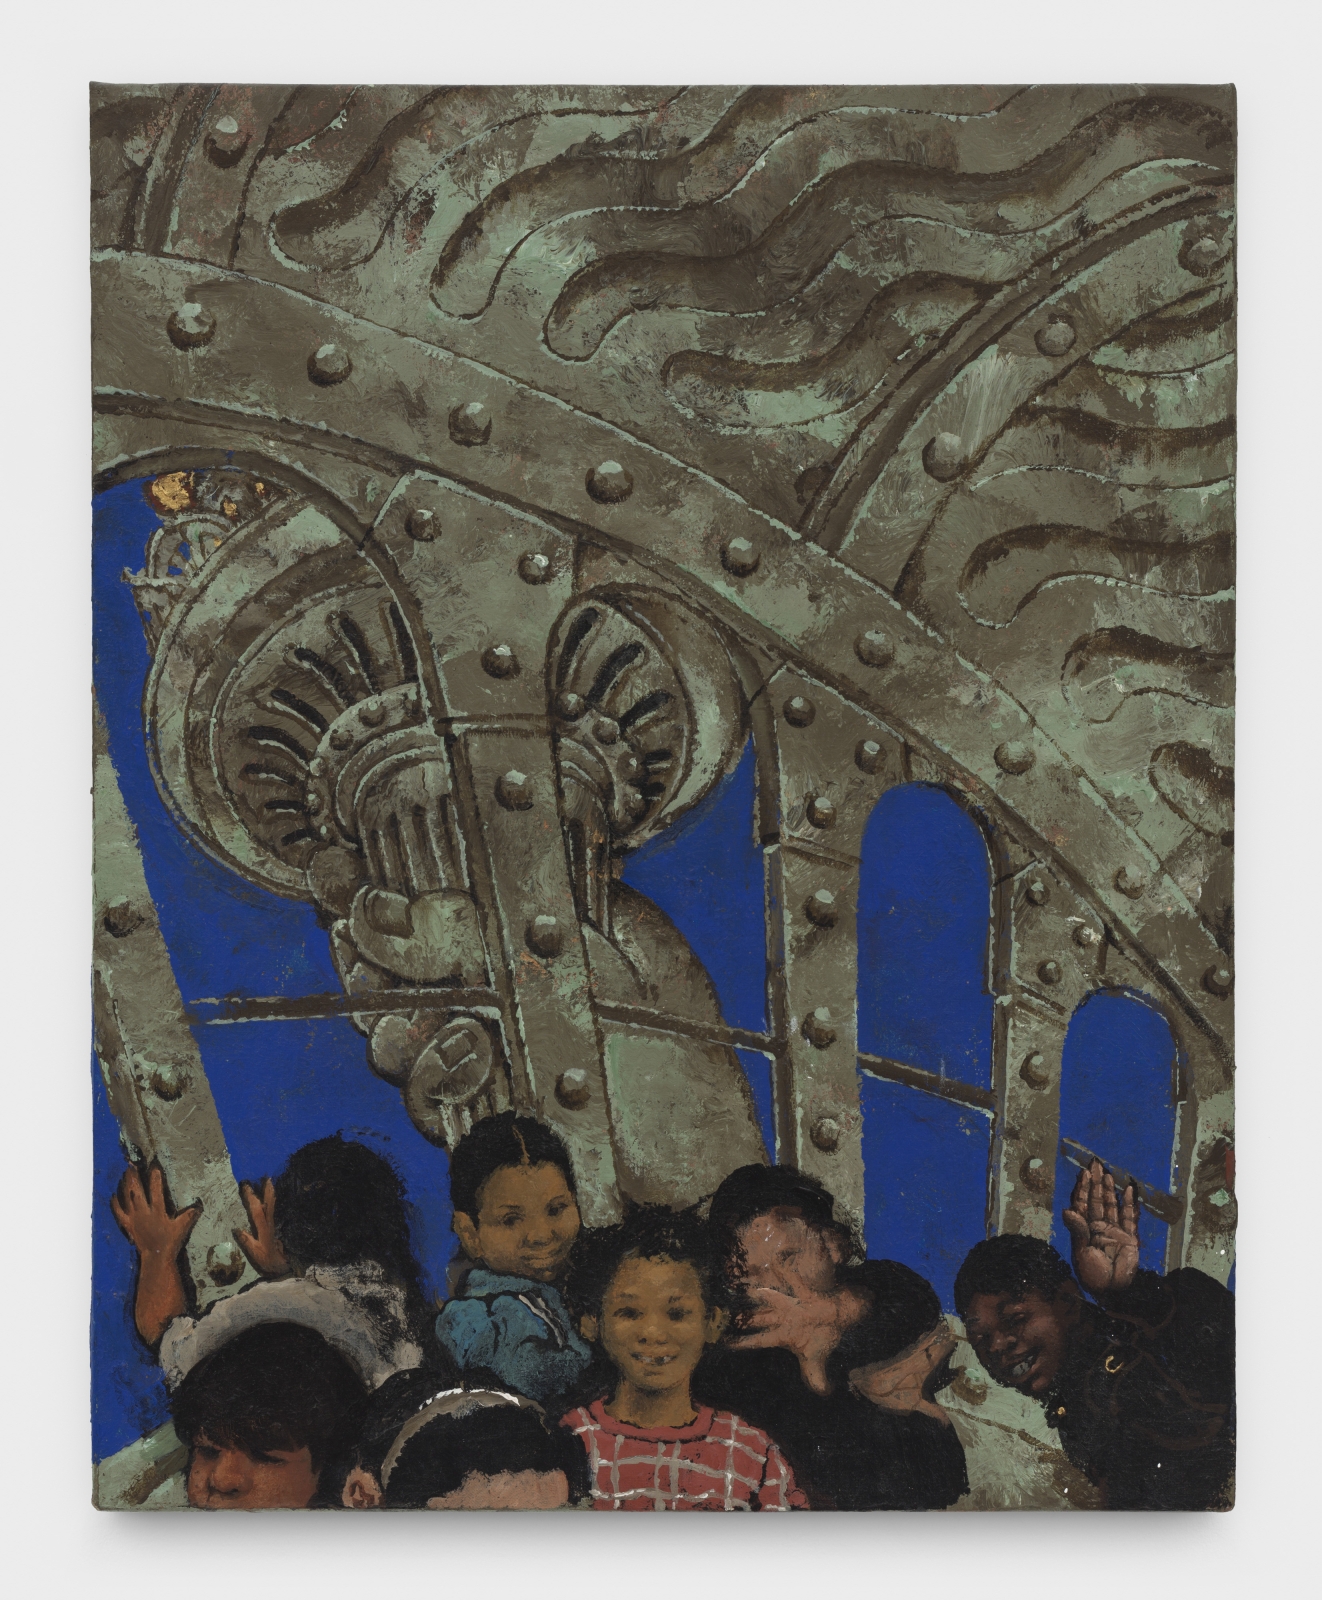 Martin Wong
Liberty, 1986
acrylic on canvas
30 x 24 ins.
76.2 x 61 cm